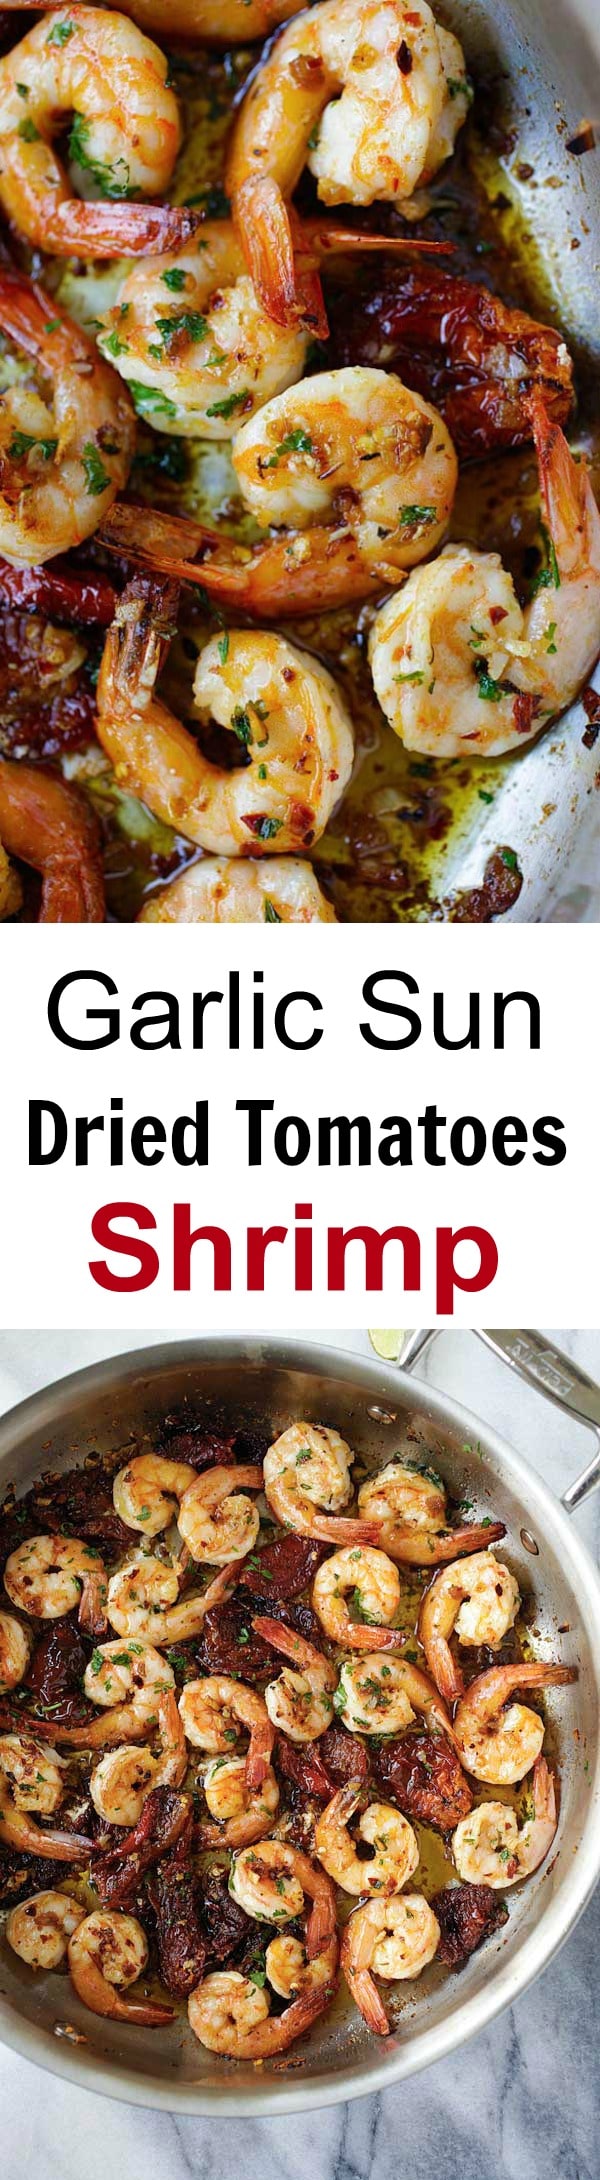 Garlic Sun-Dried Tomatoes Roasted Shrimp - Best garlic roasted shrimp recipe ever! Learn how to make this Spanish/Mediterranean dish | rasamalaysia.com